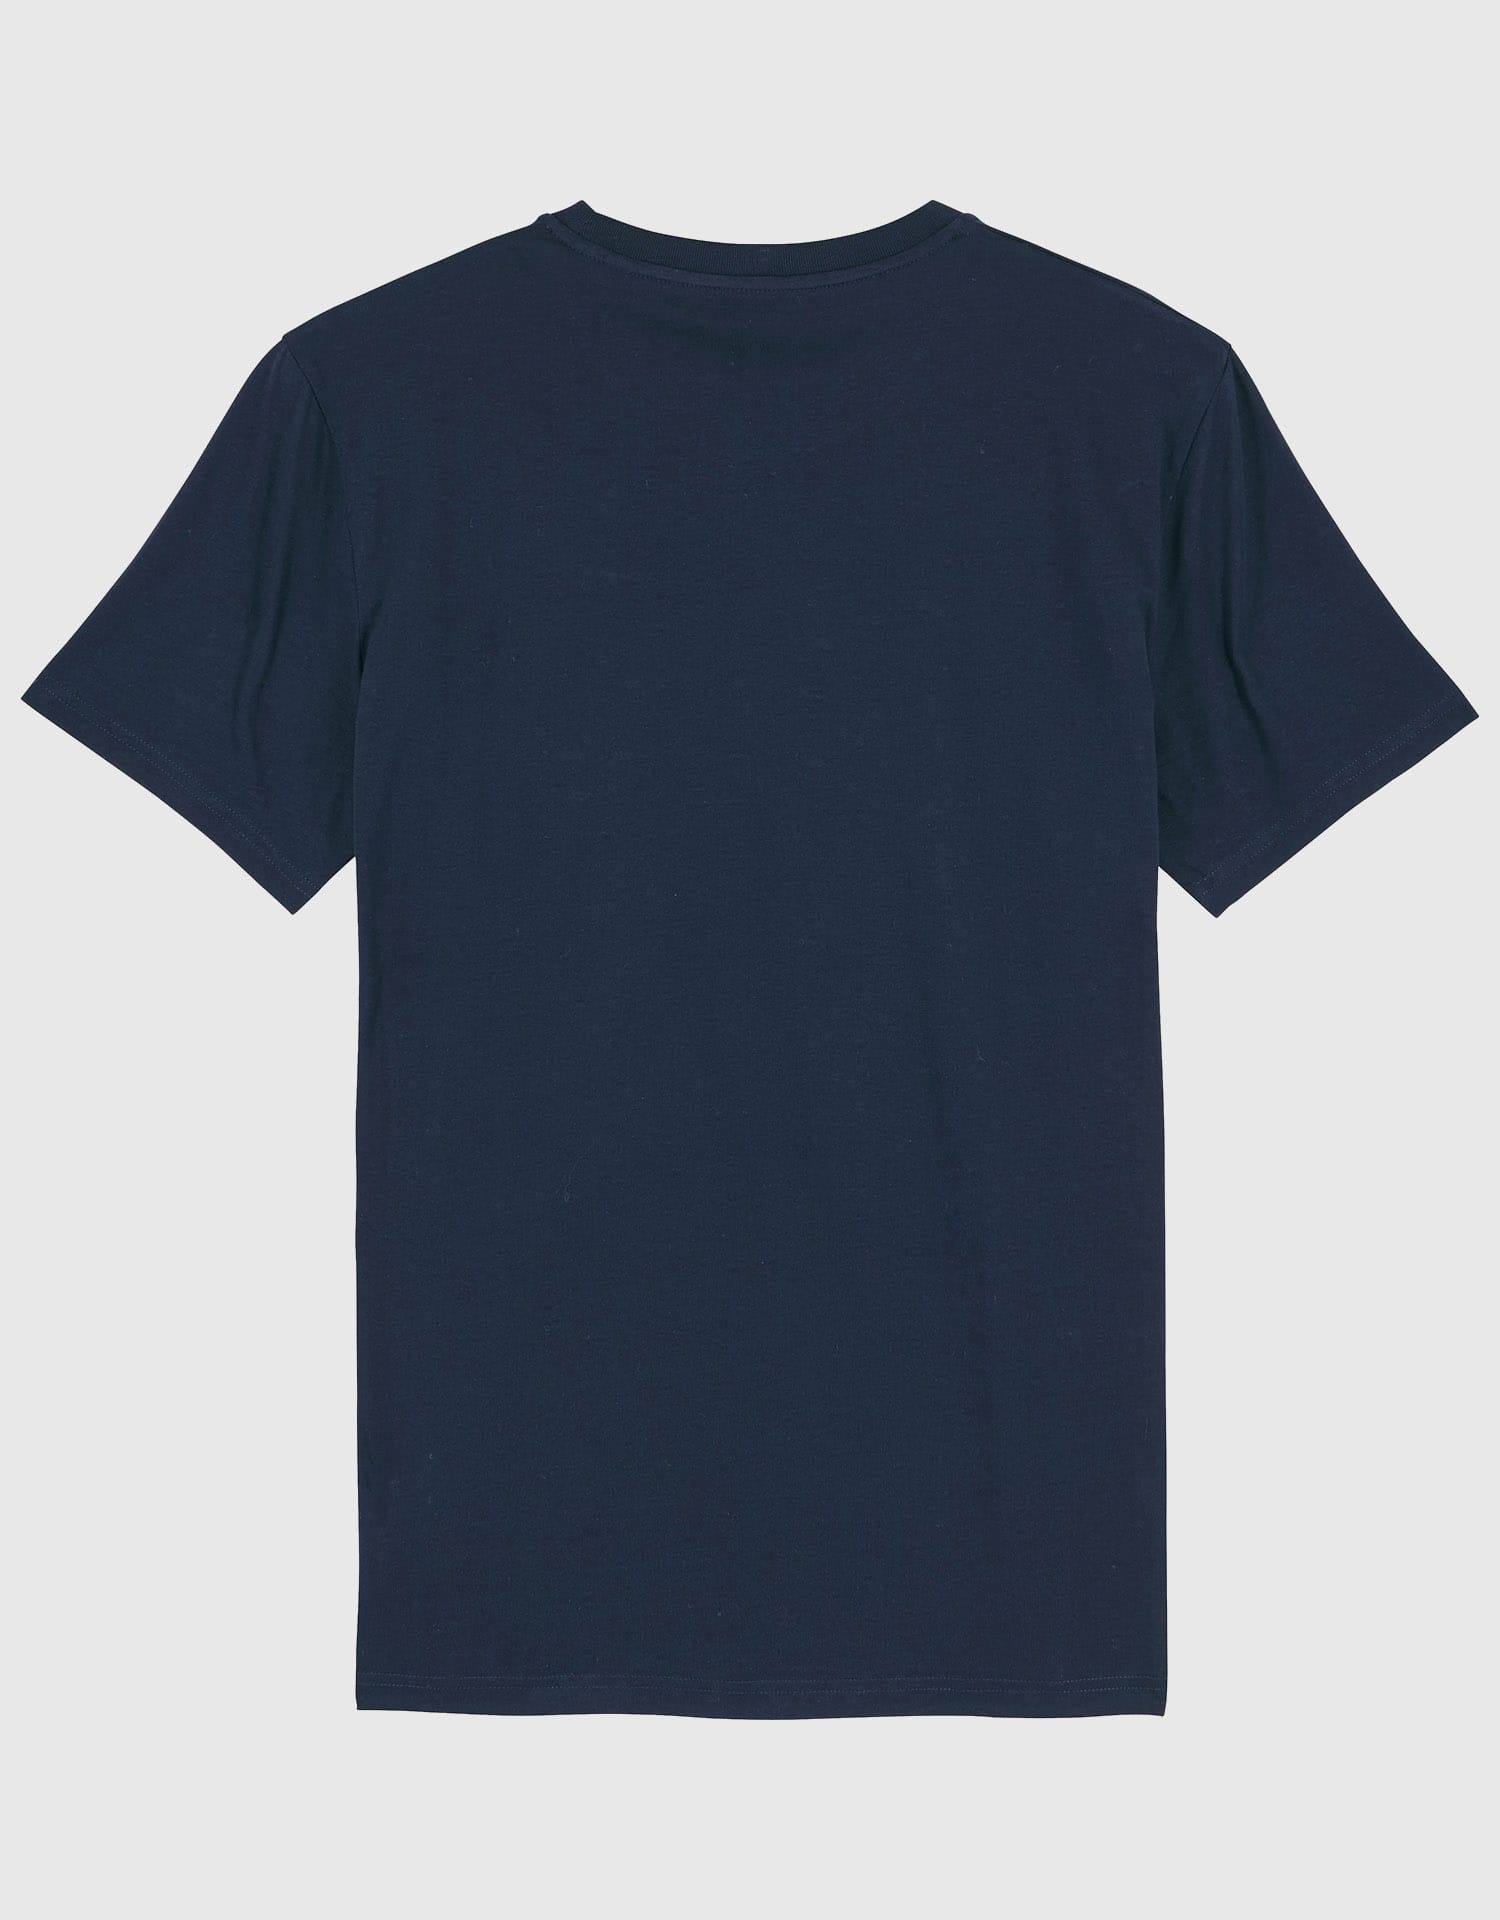 ninesquared-tshirt-blue-navy-bk-M